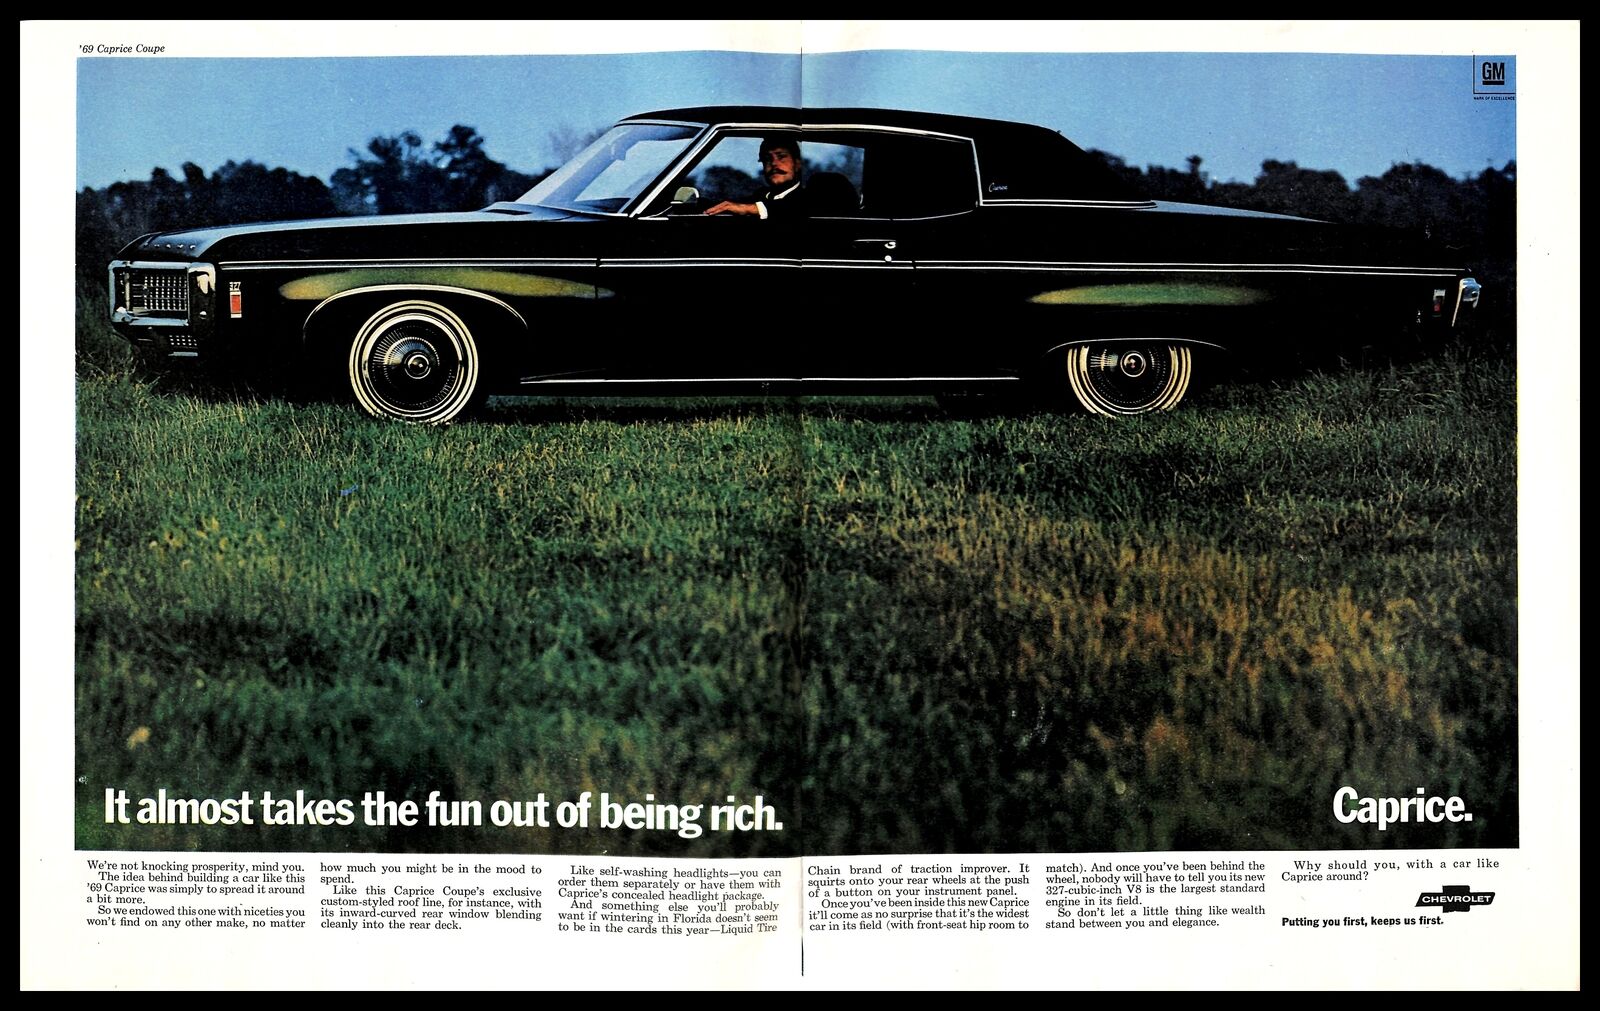 1968 69 Chevrolet Caprice Coupe Classic Car Vintage PRINT AD Green Landscape 60s